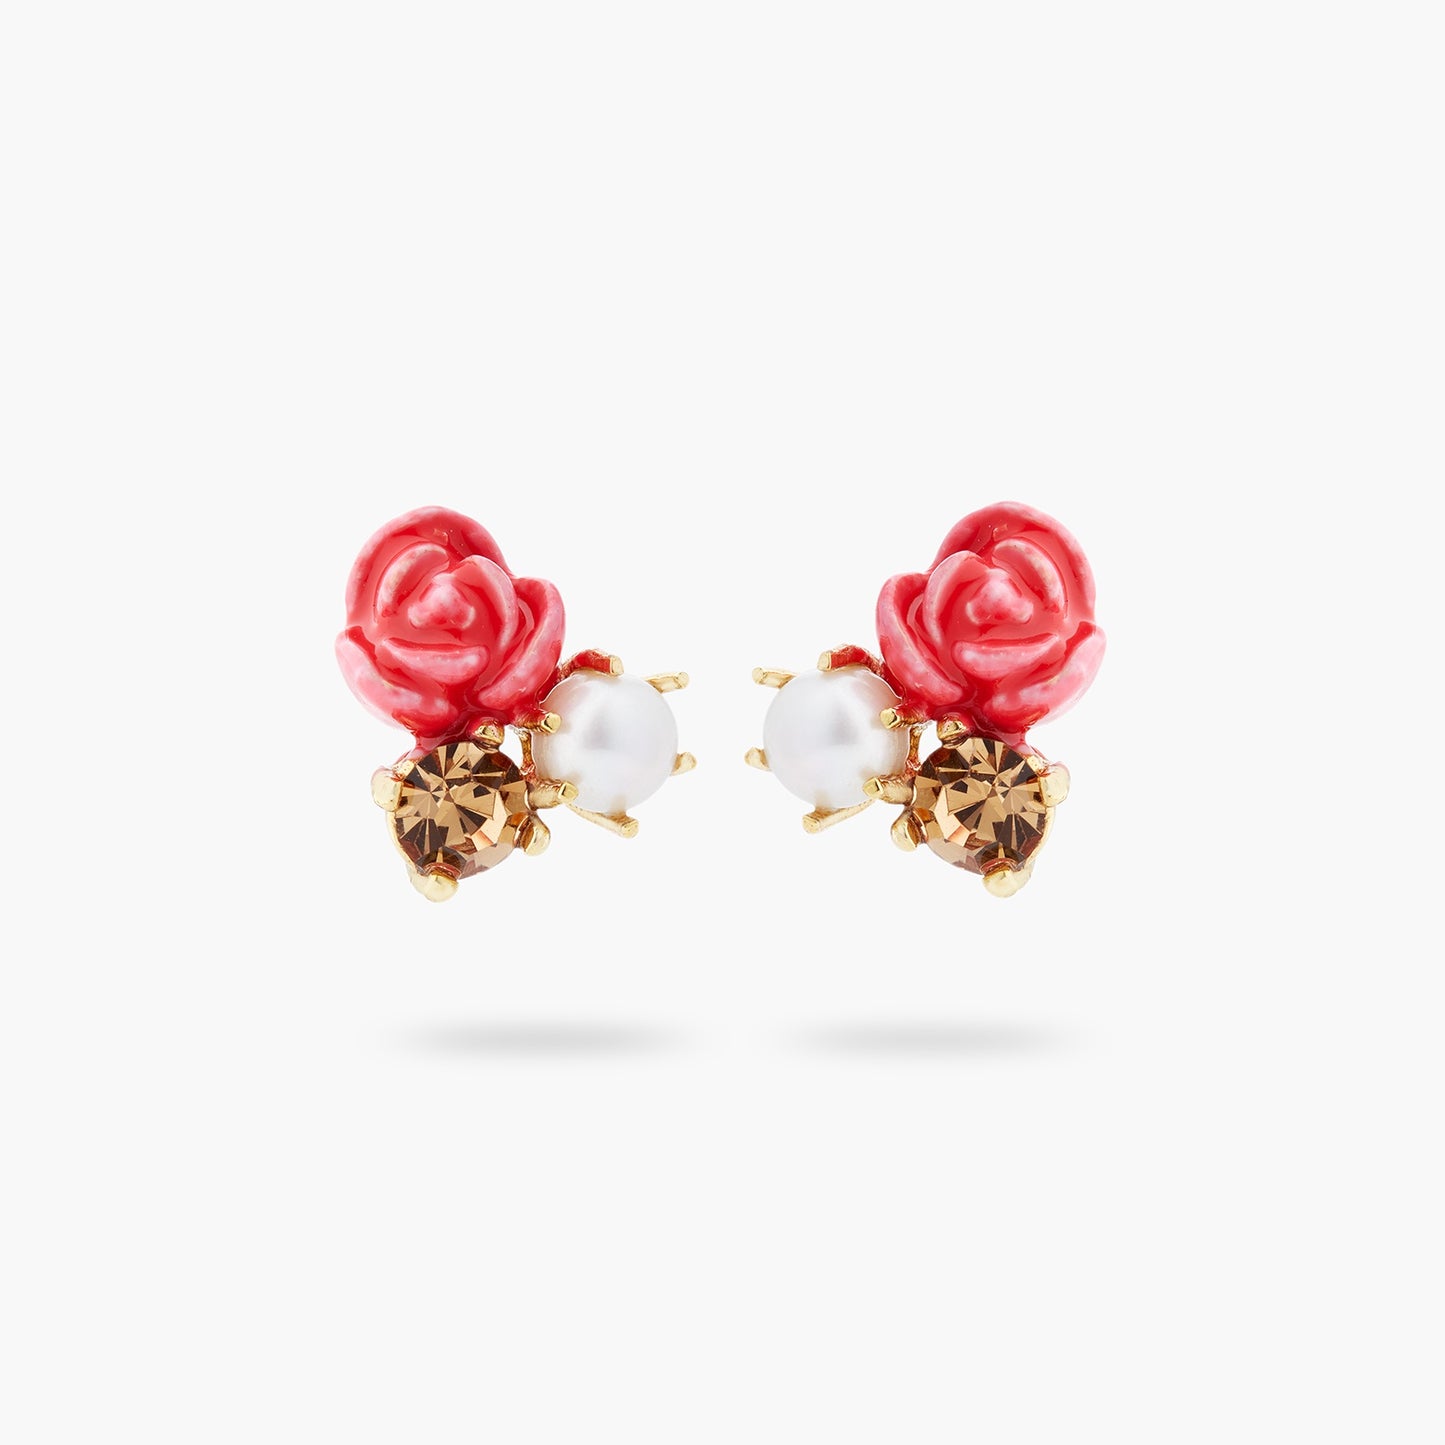 Rose, cultured pearl and crystal drop earrings | ASAR1101